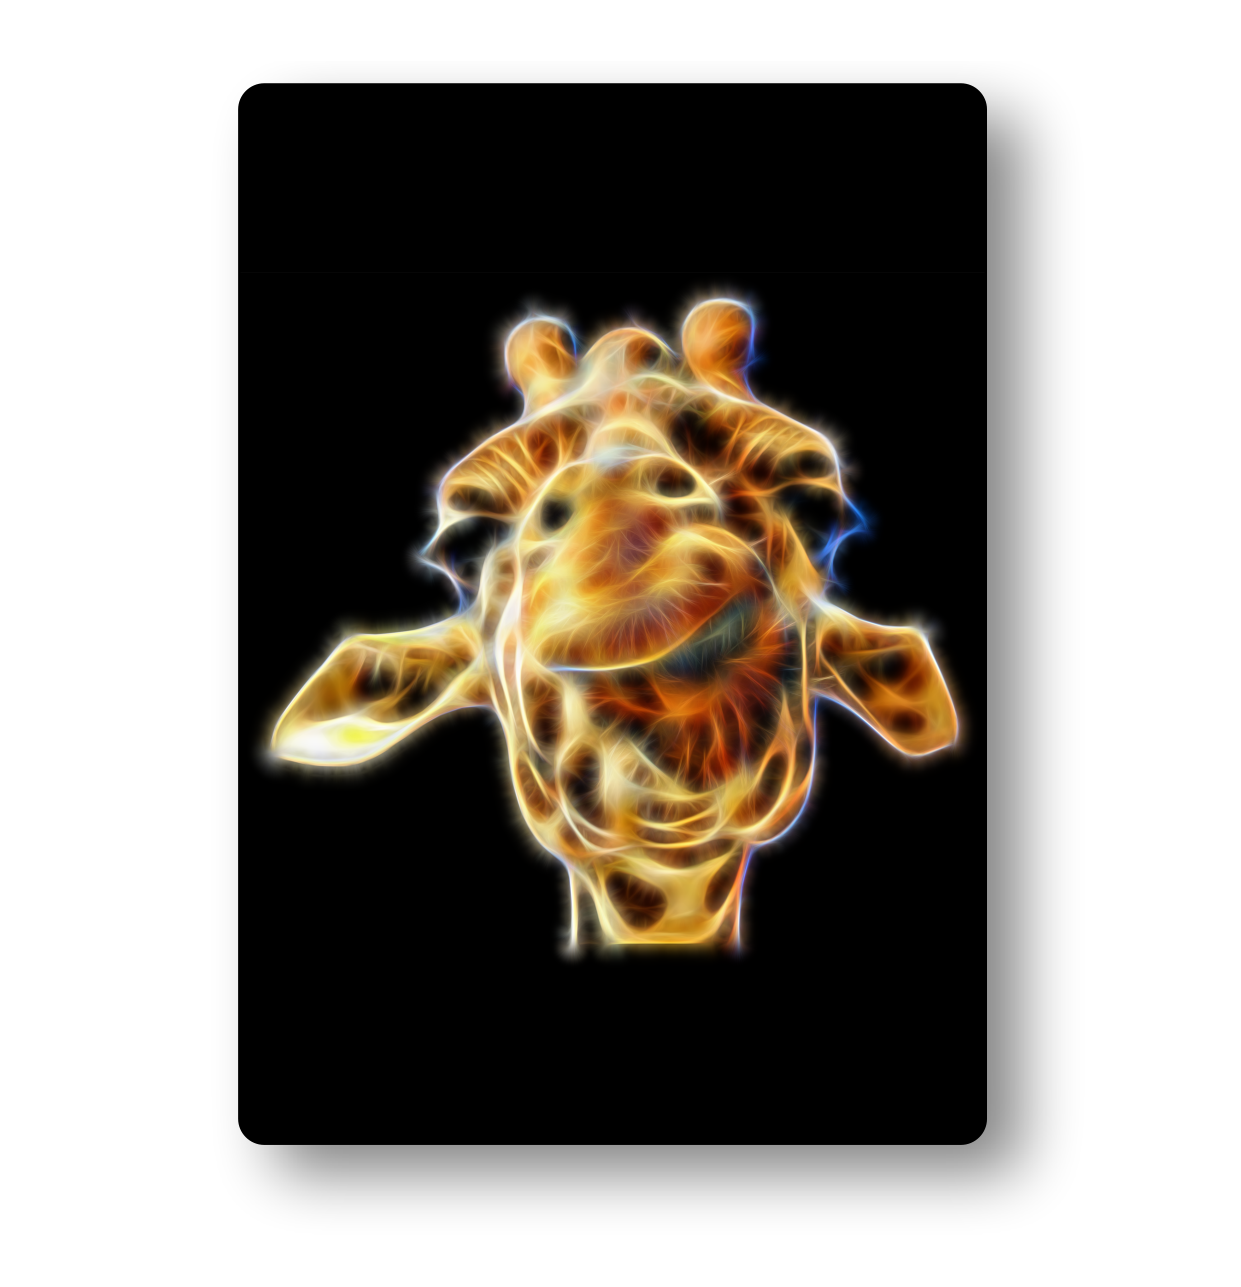 Giraffe Metal Wall Plaque